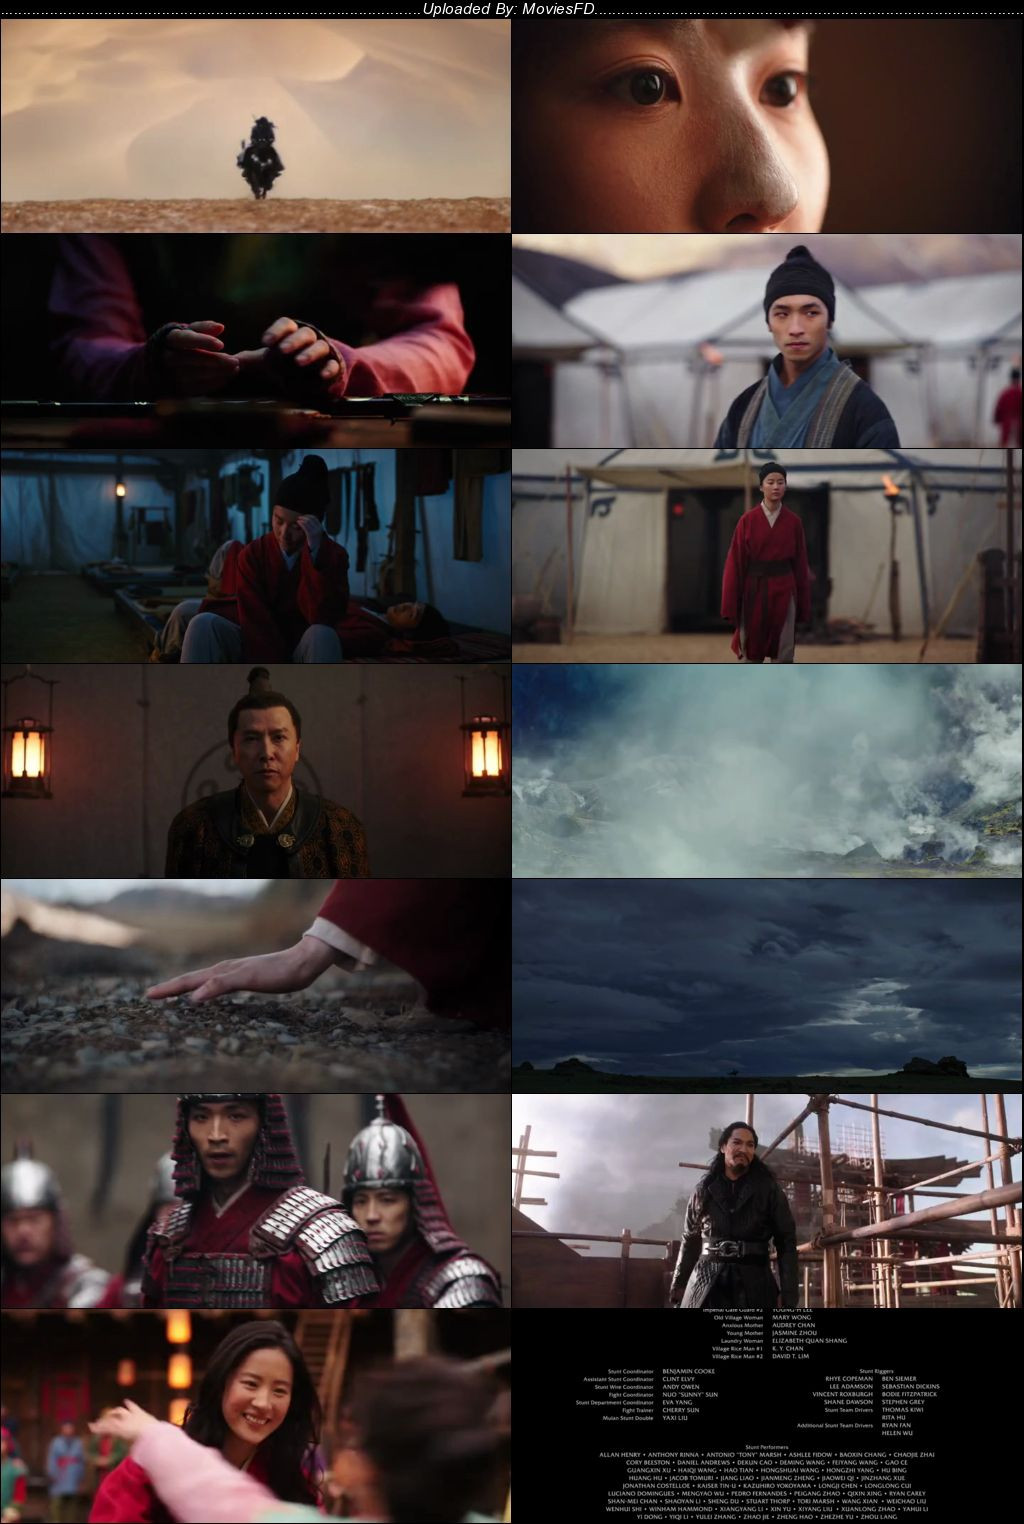 Download Mulan (2020) BluRay [Hindi + English] ESub 480p 720p